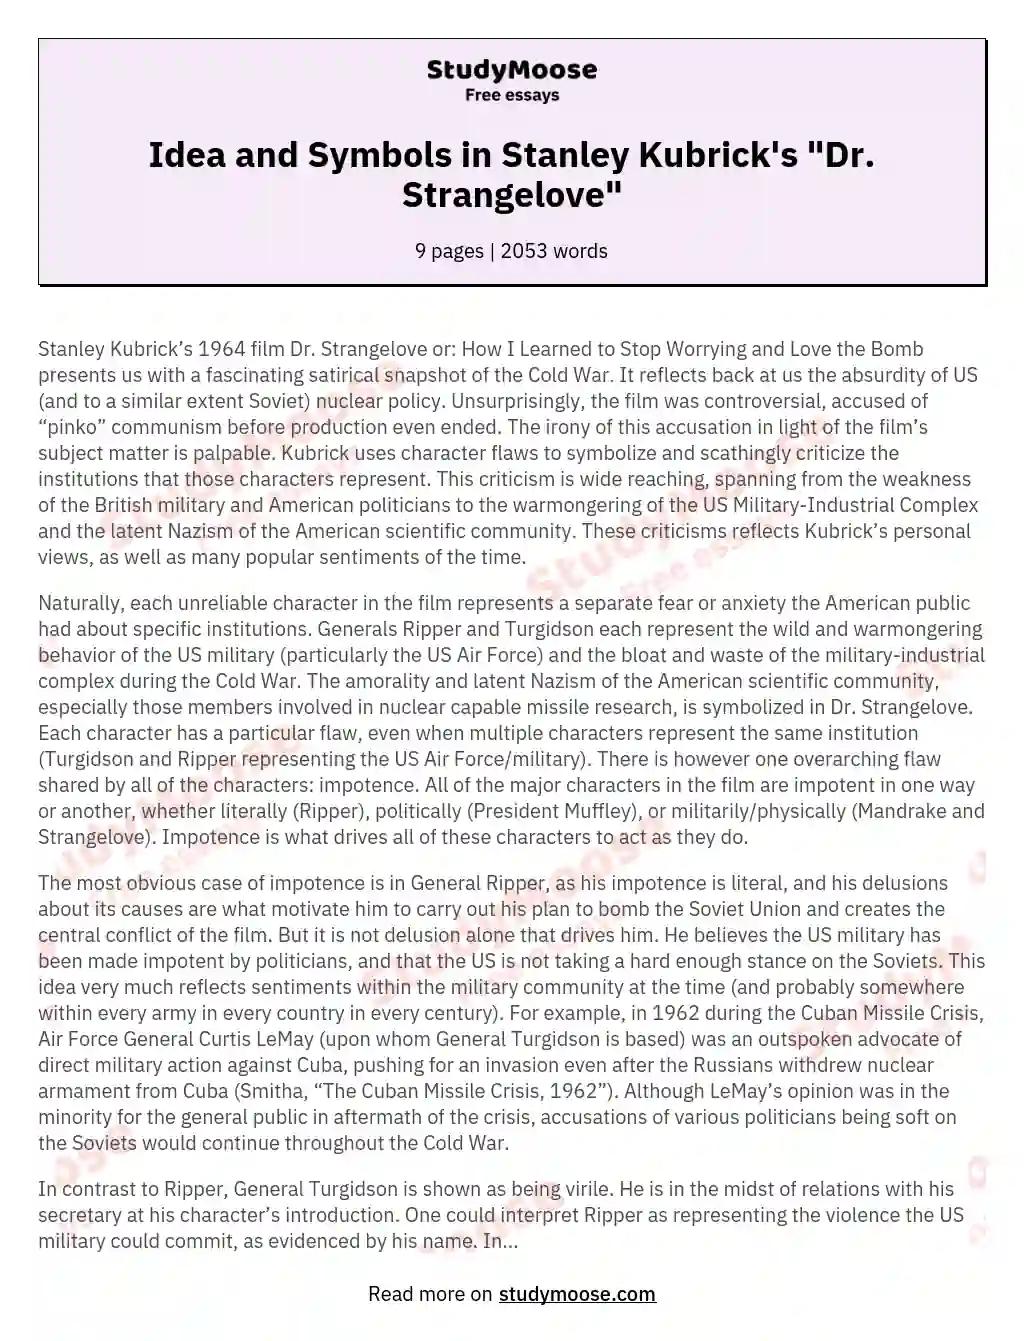 Idea and Symbols in Stanley Kubrick's "Dr. Strangelove"